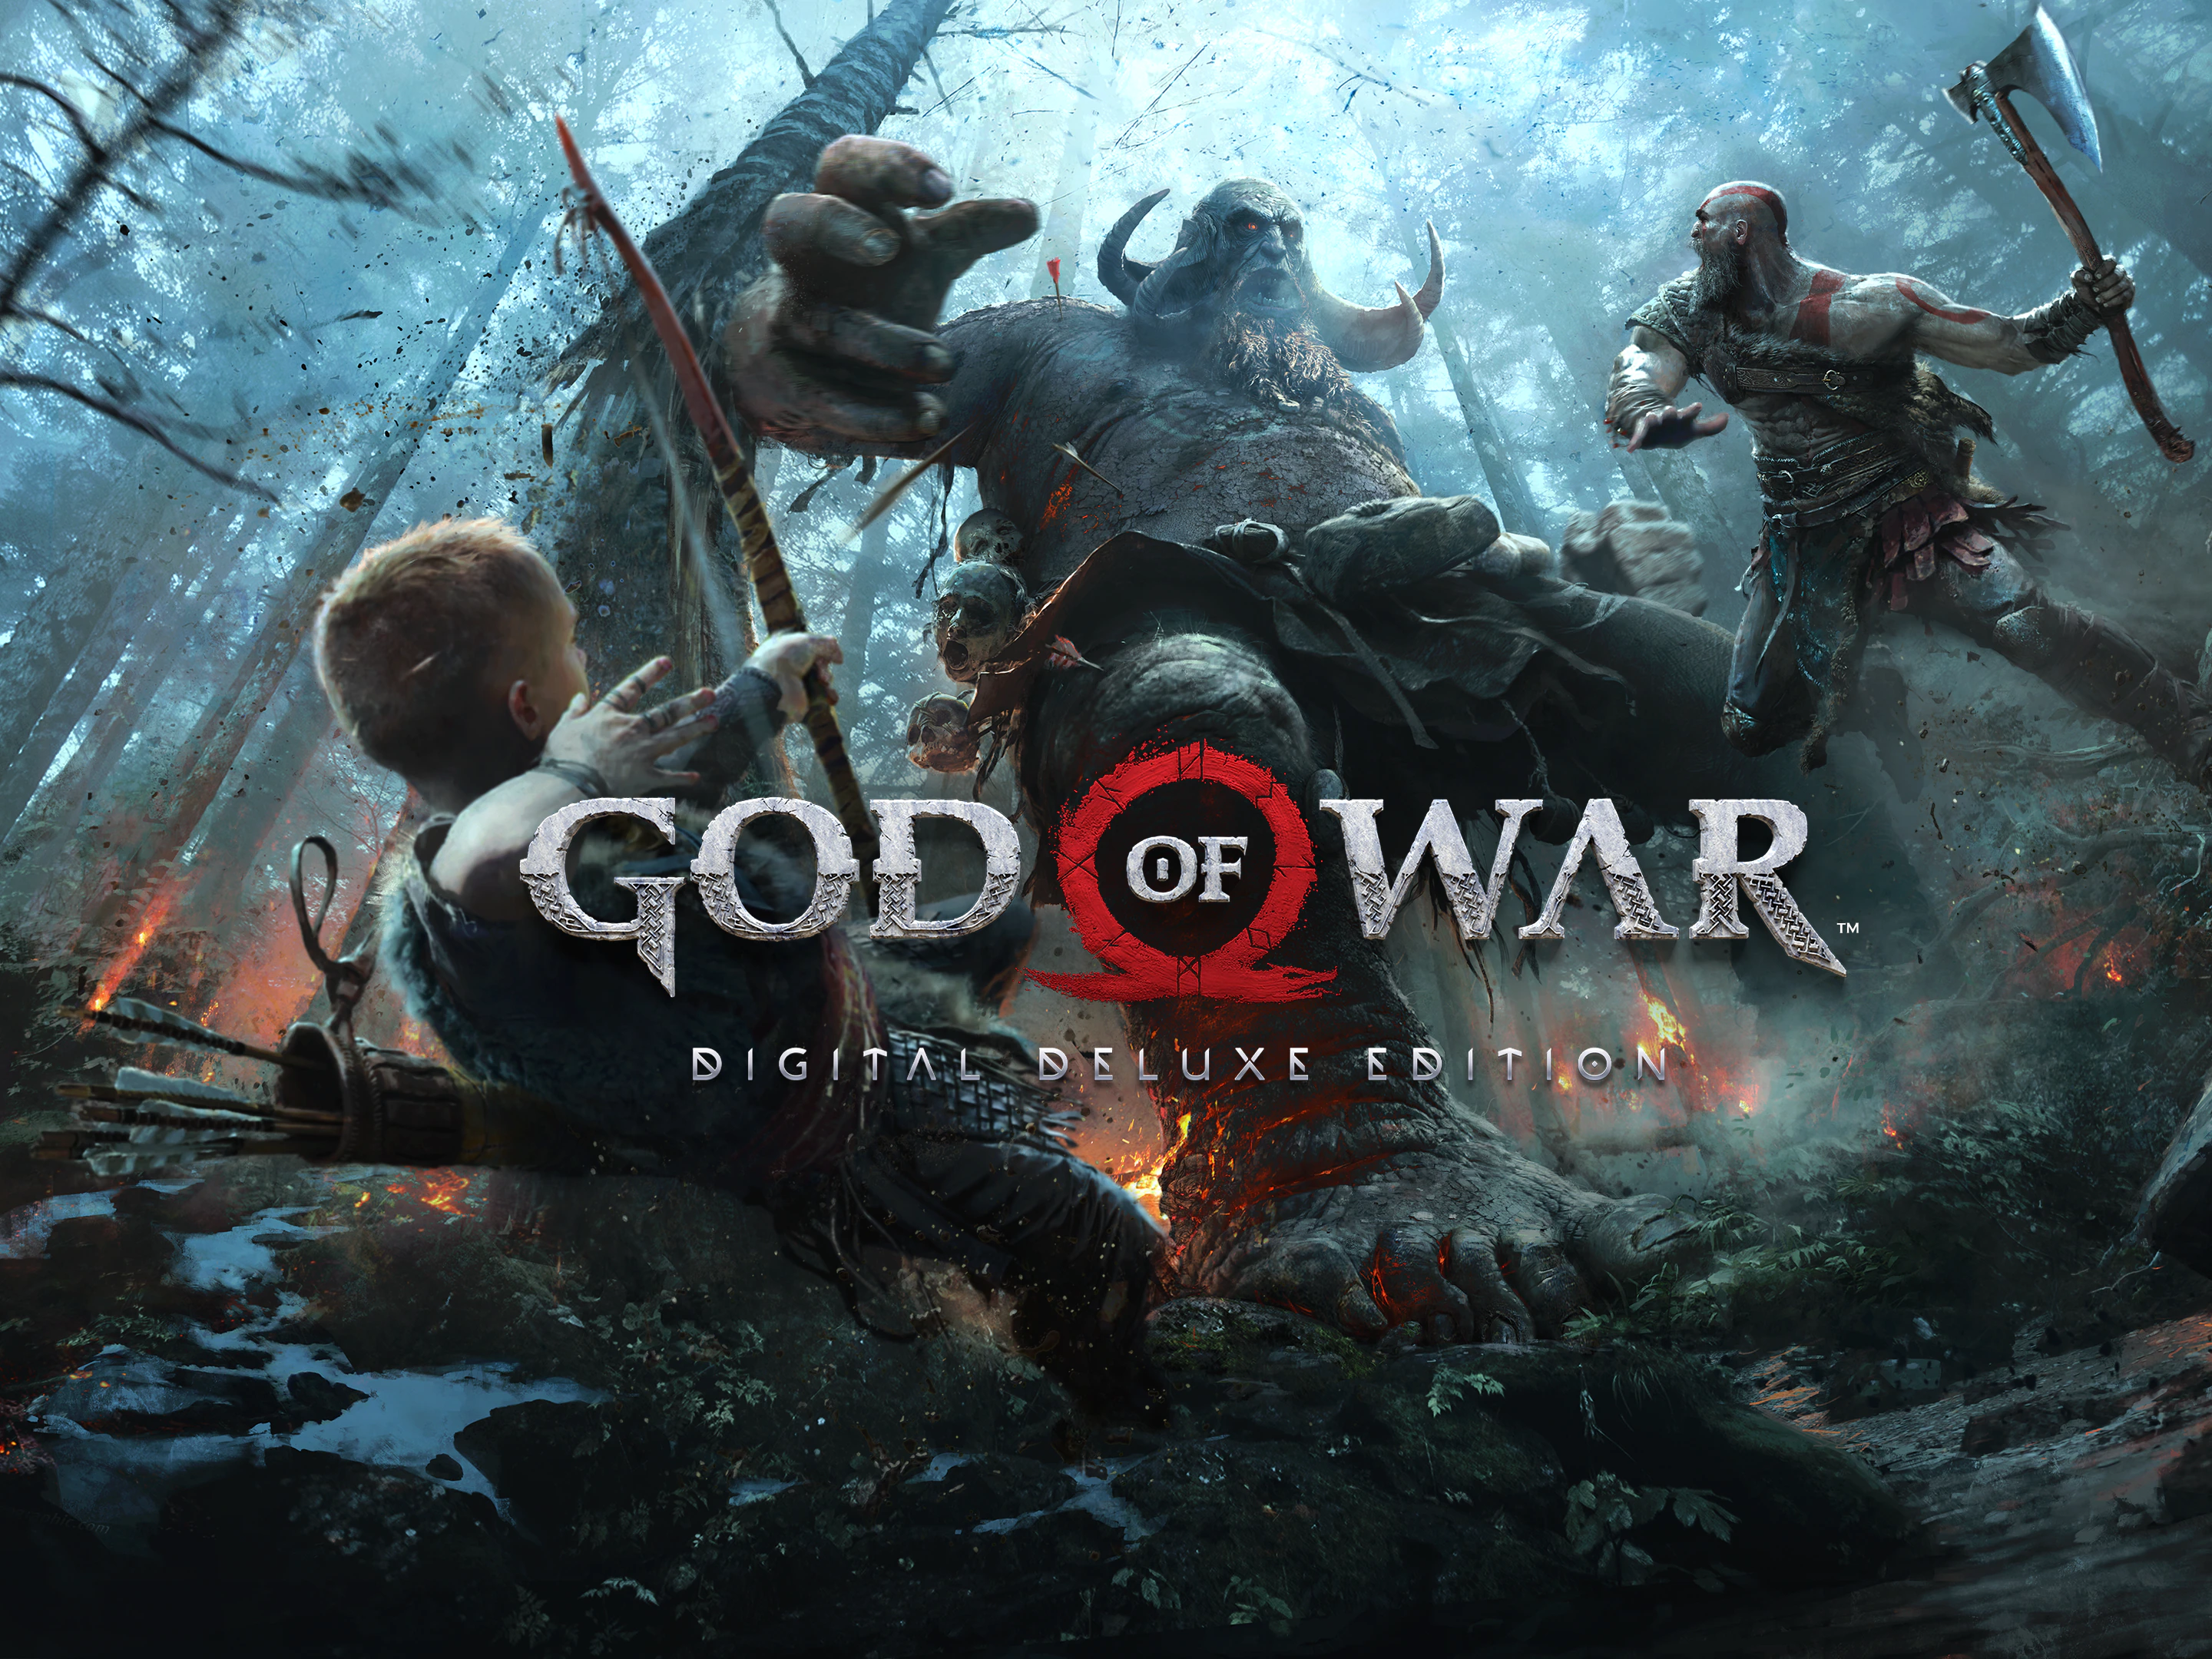 god of war oyun önerisi